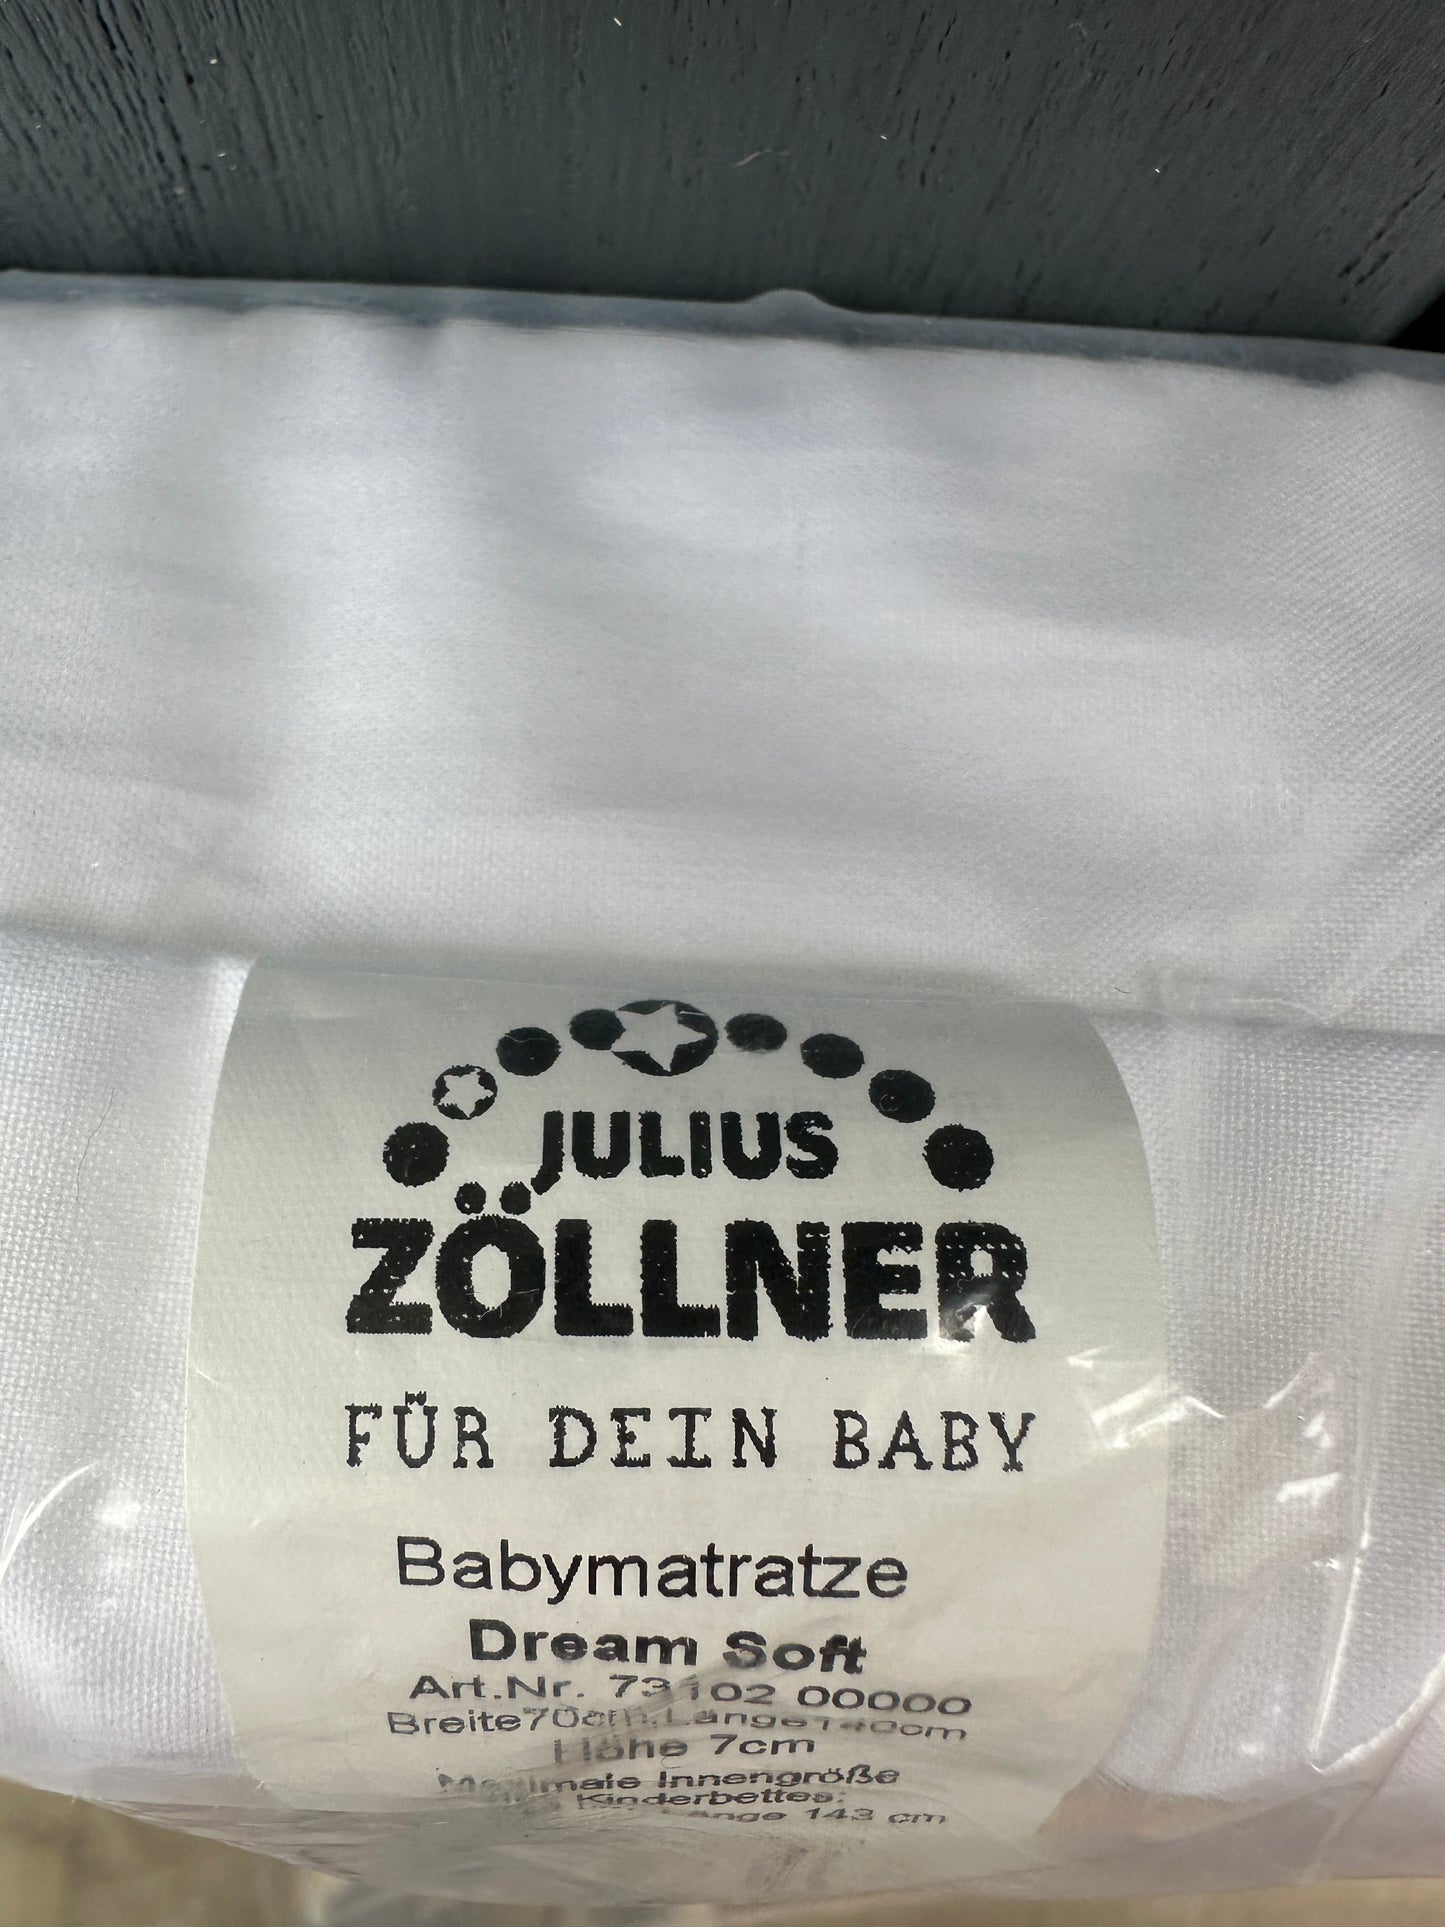 Babymatraze Dream Soft Julius Zöllner